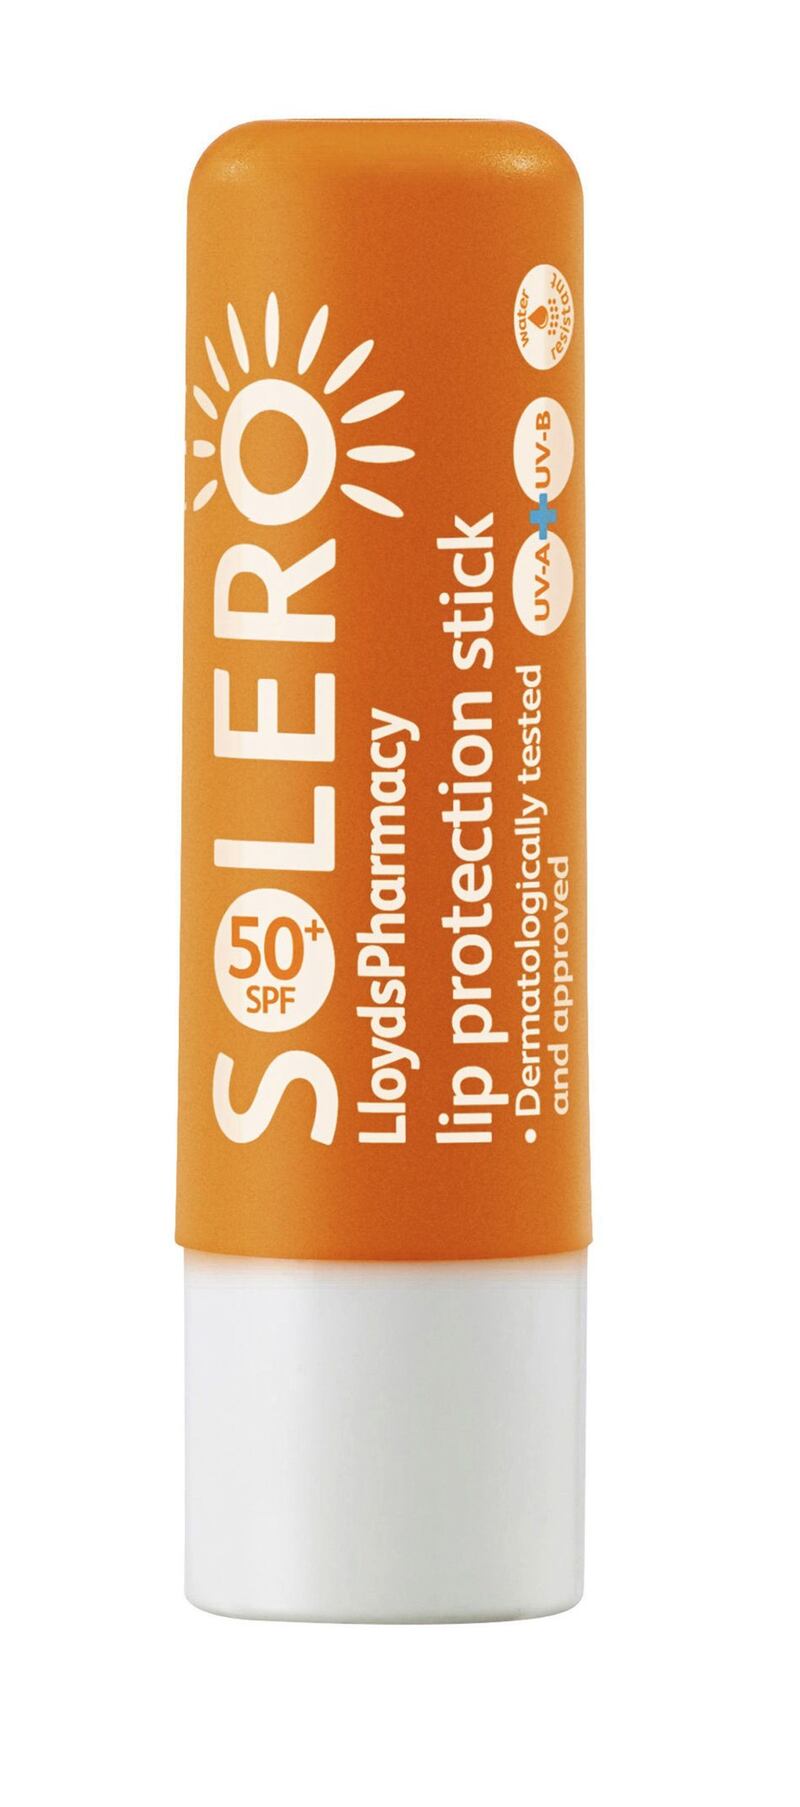 Solero Lip Protection Stick SPF50+, &pound;3 (LloydsPharmacy stores)